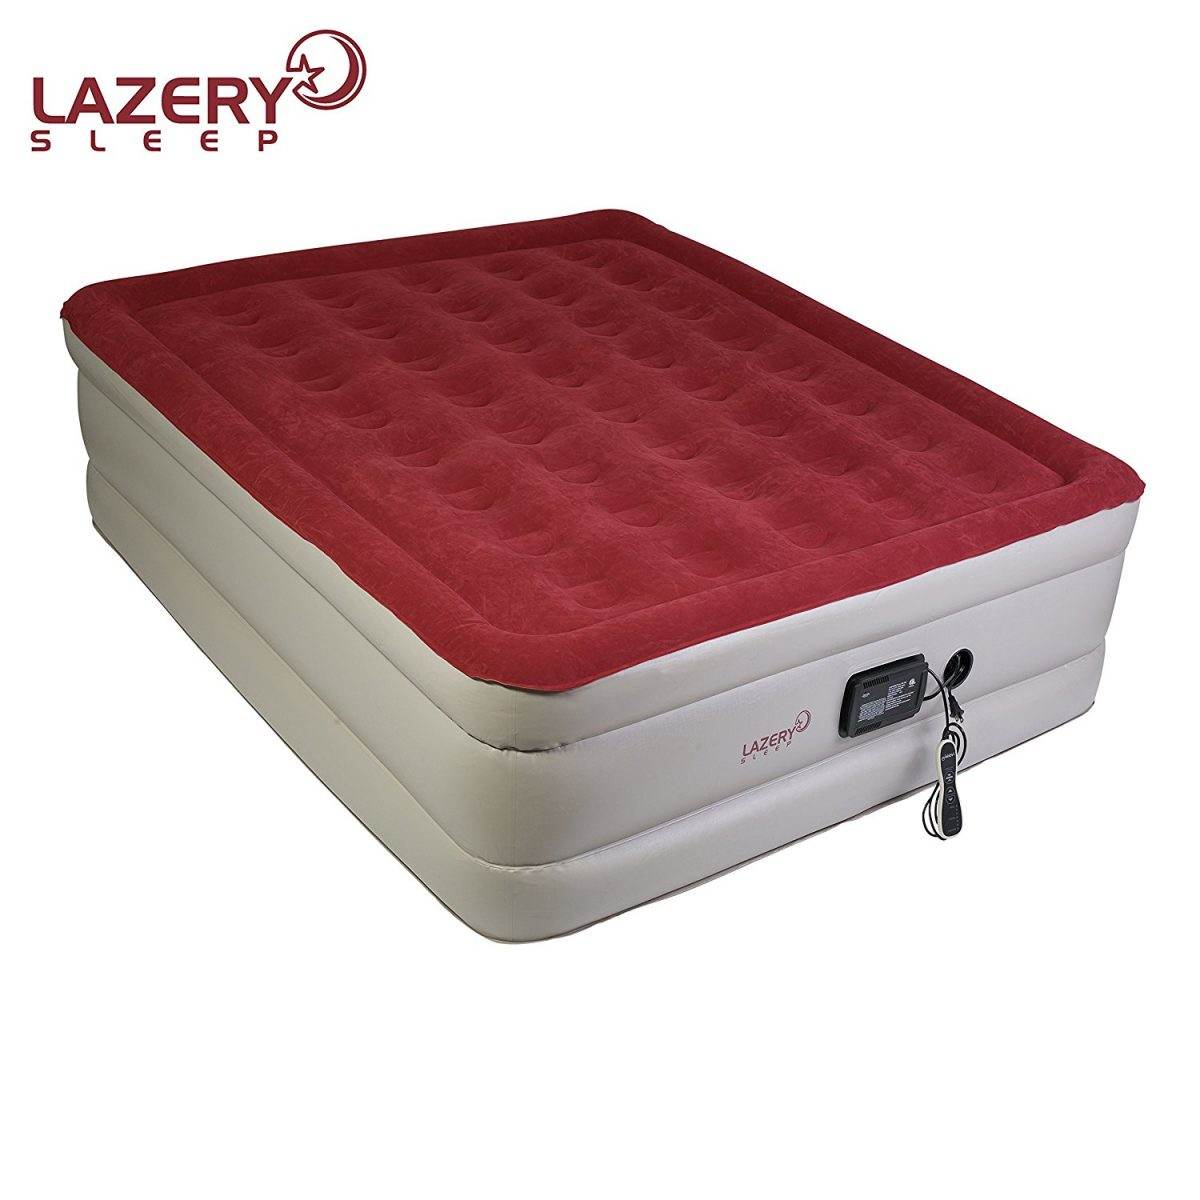 Lazery Sleep Raised Electric Air Mattress